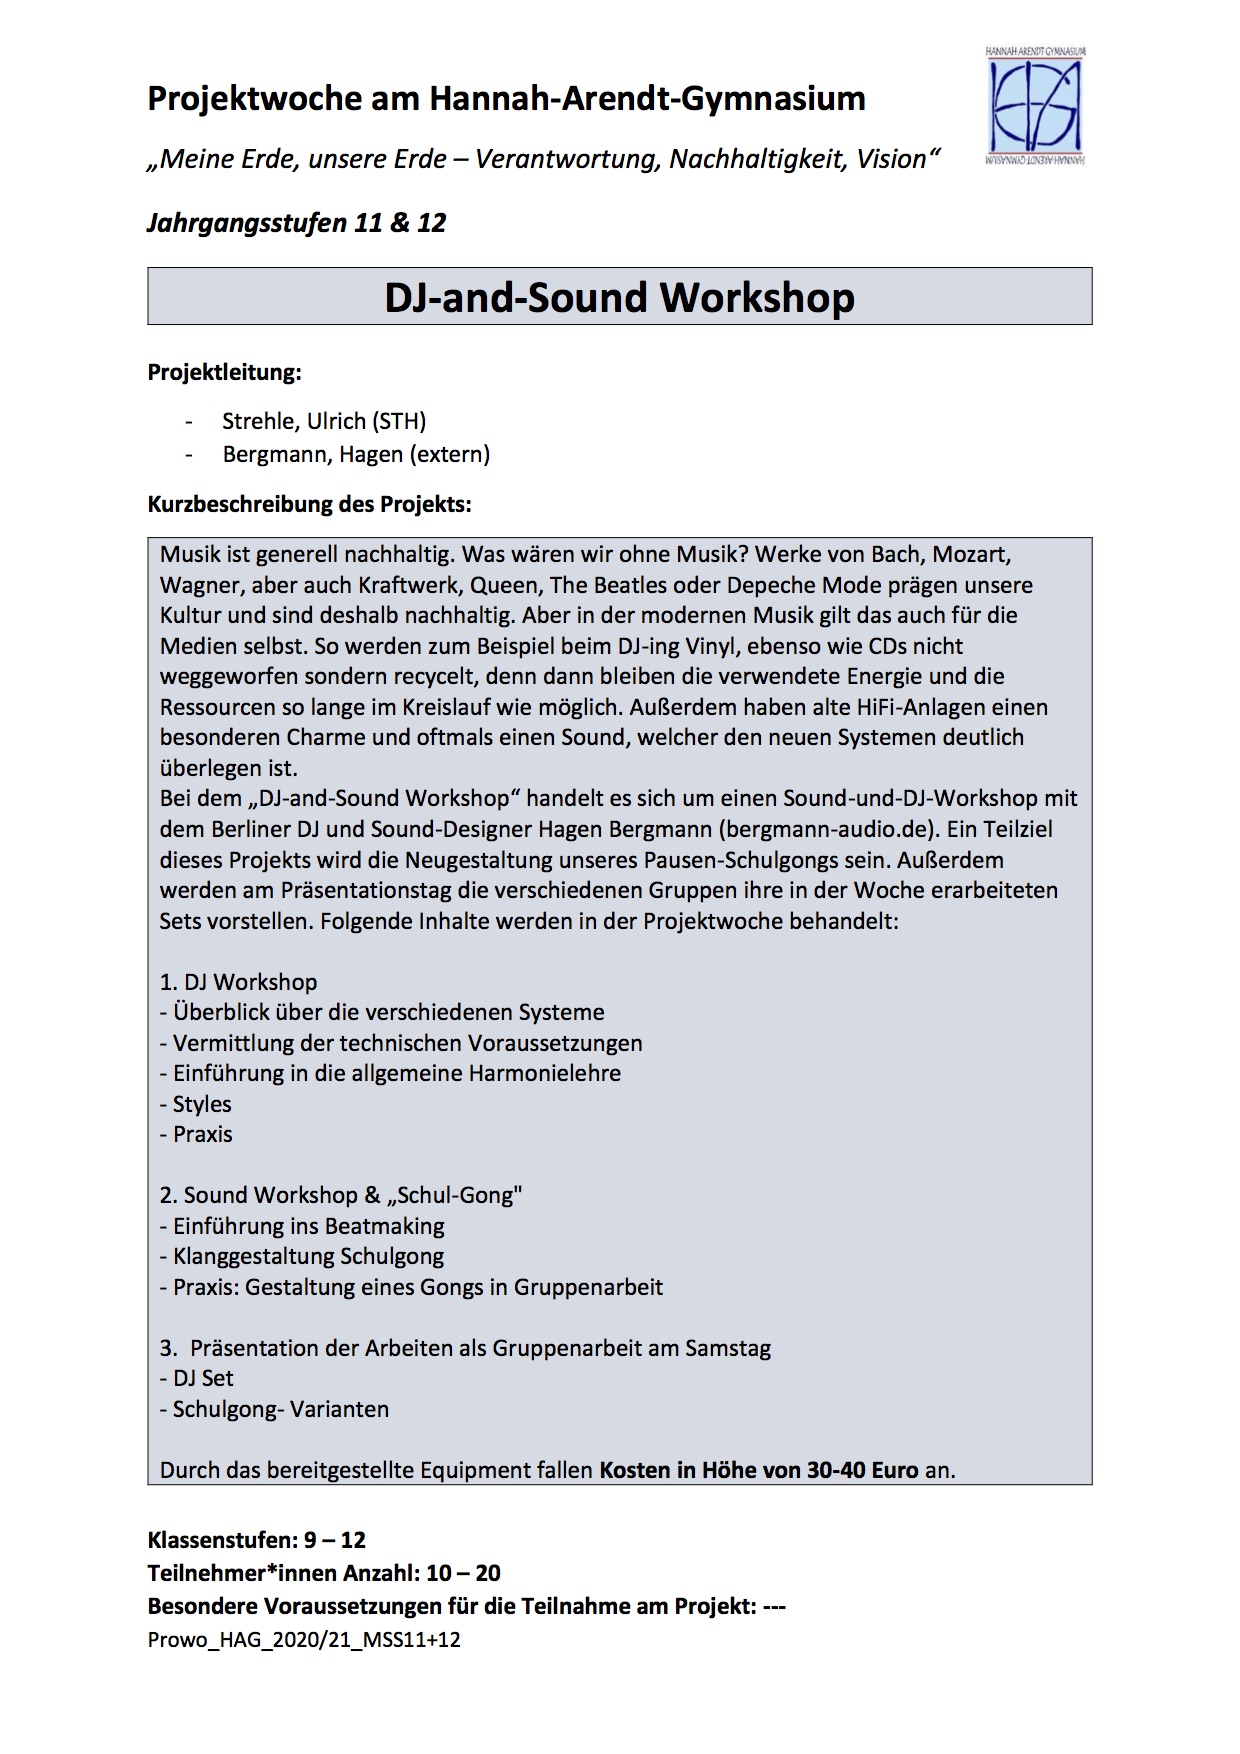 DJ-and-Sound Workshop